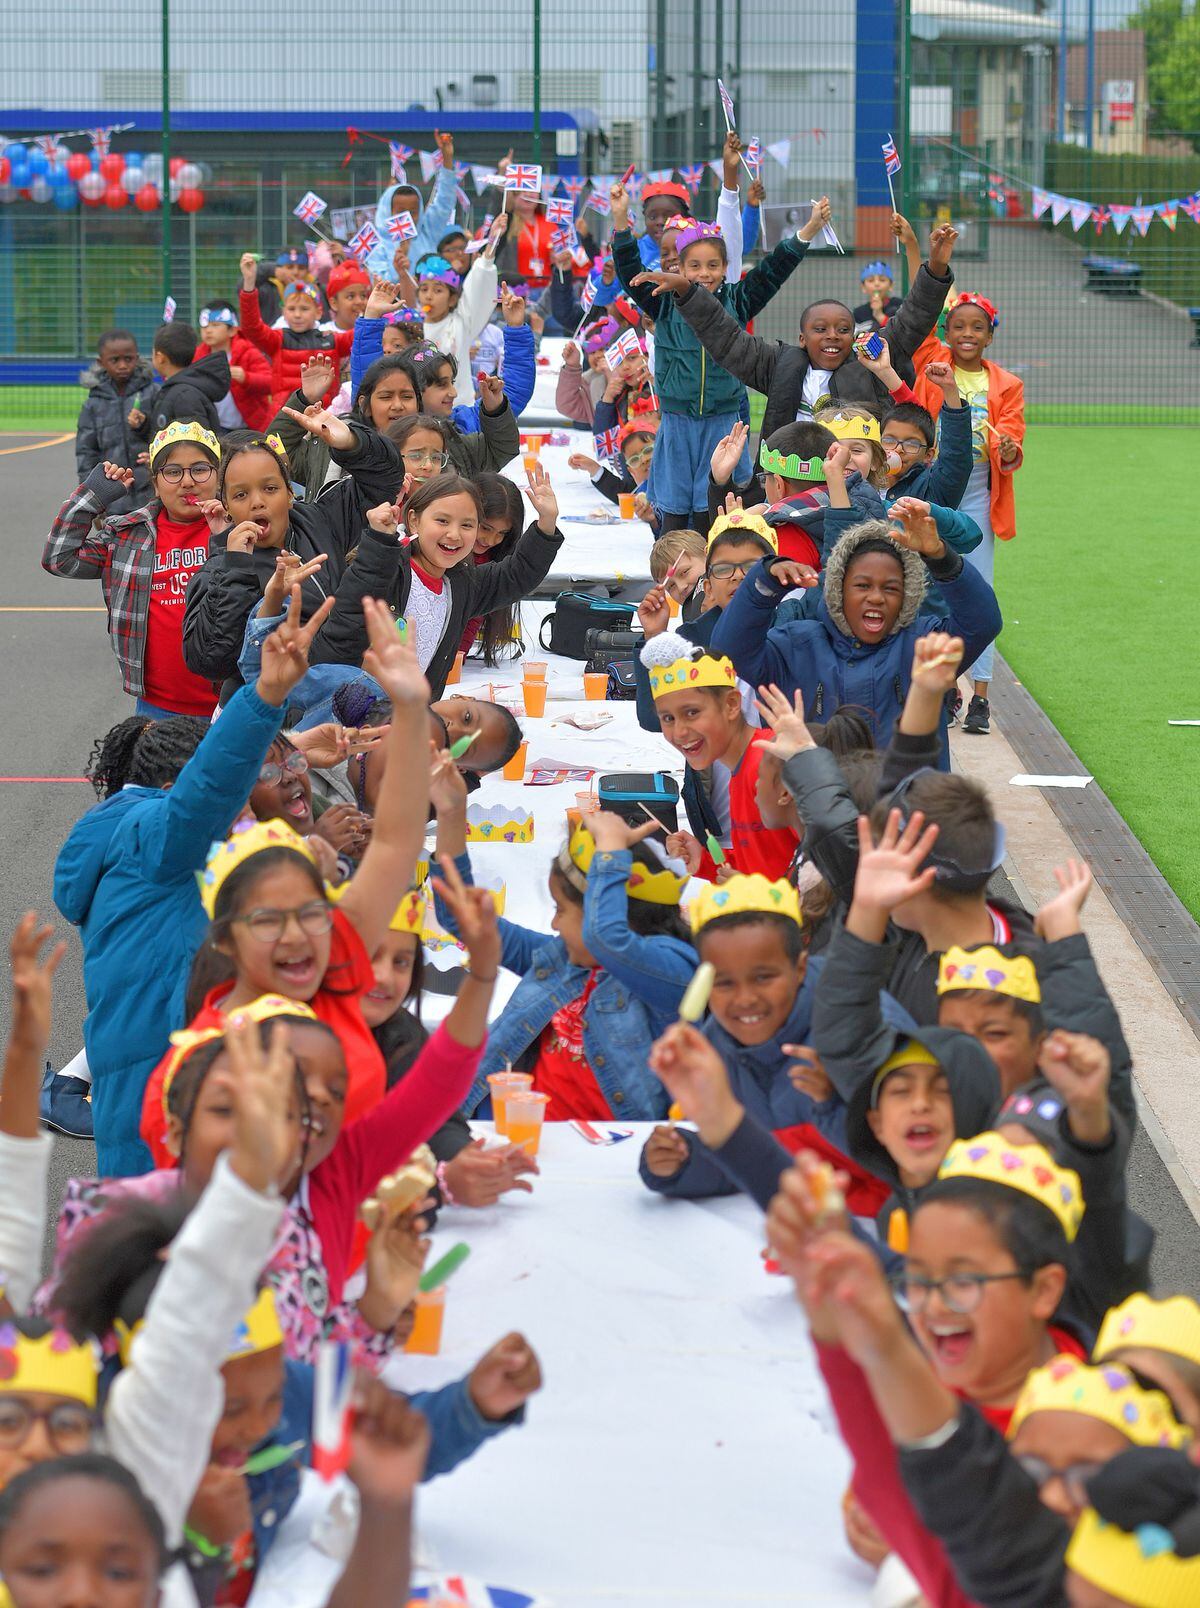 Children from St Matthew's School, Smethwick, enjoying their Jubilee party.